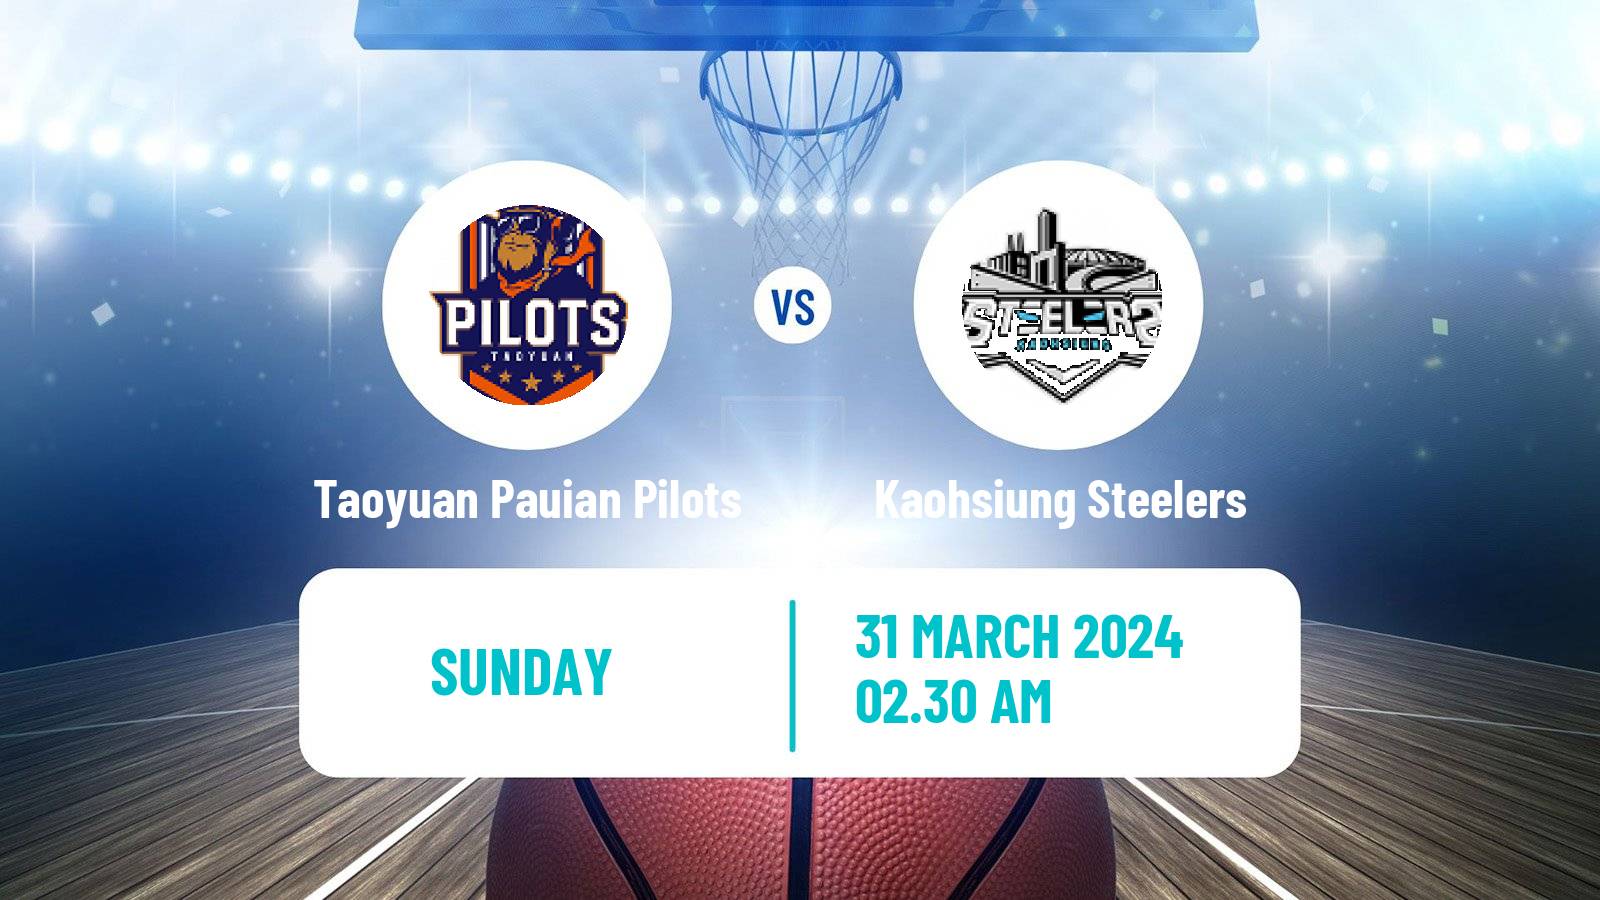 Basketball Taiwan P League Basketball Taoyuan Pauian Pilots - Kaohsiung Steelers